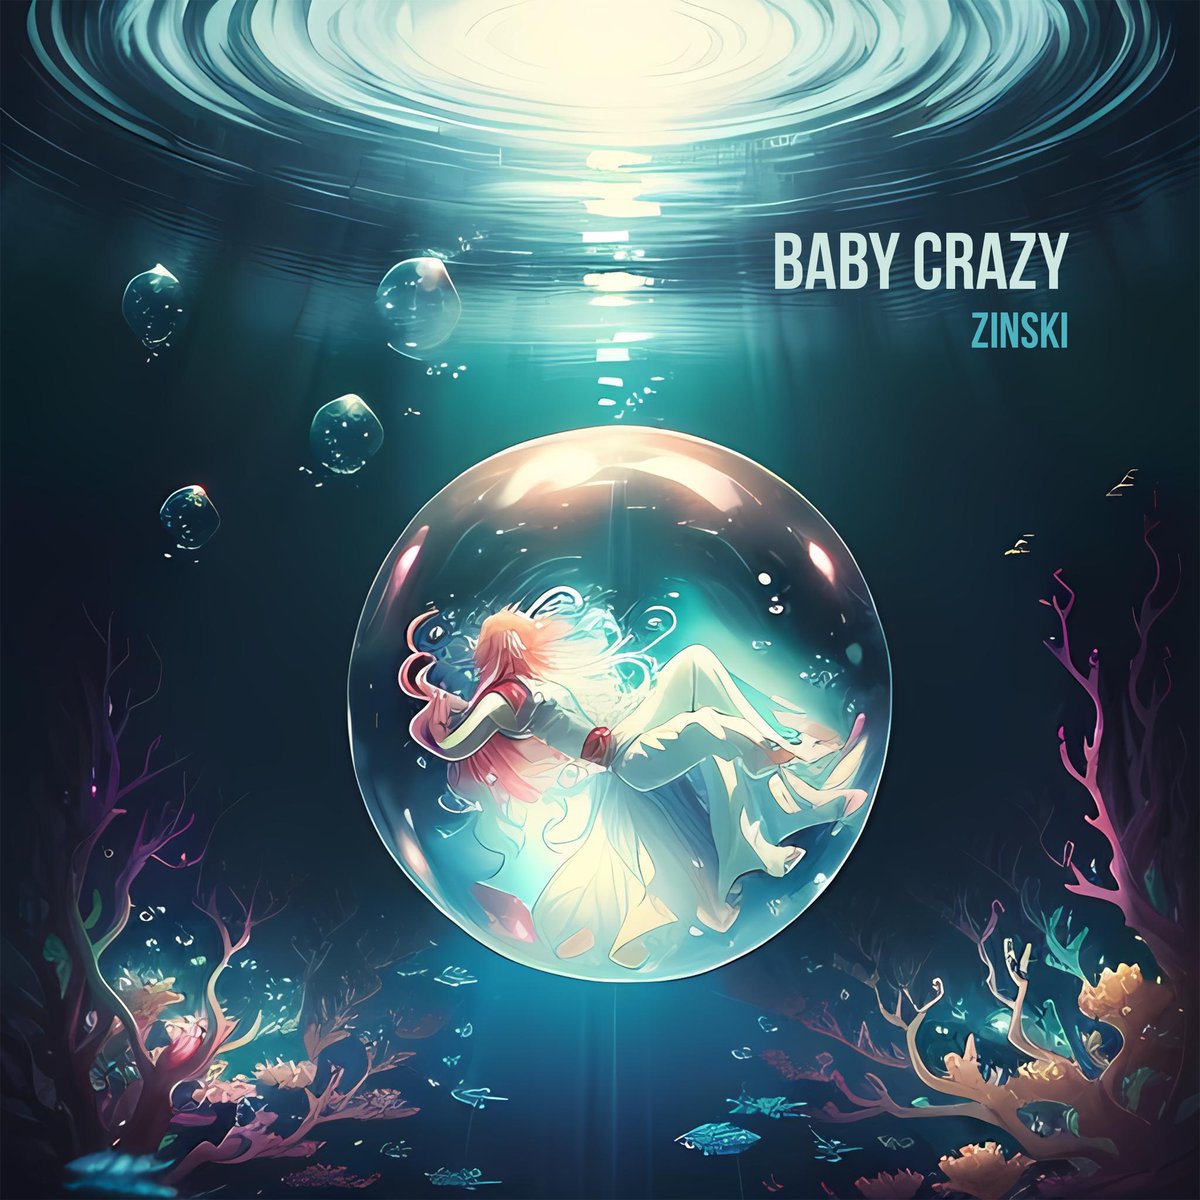 Baby Crazy by ZINSKI soundcloud.com/zinski zinskimusic.com —— #NewMusicFriday